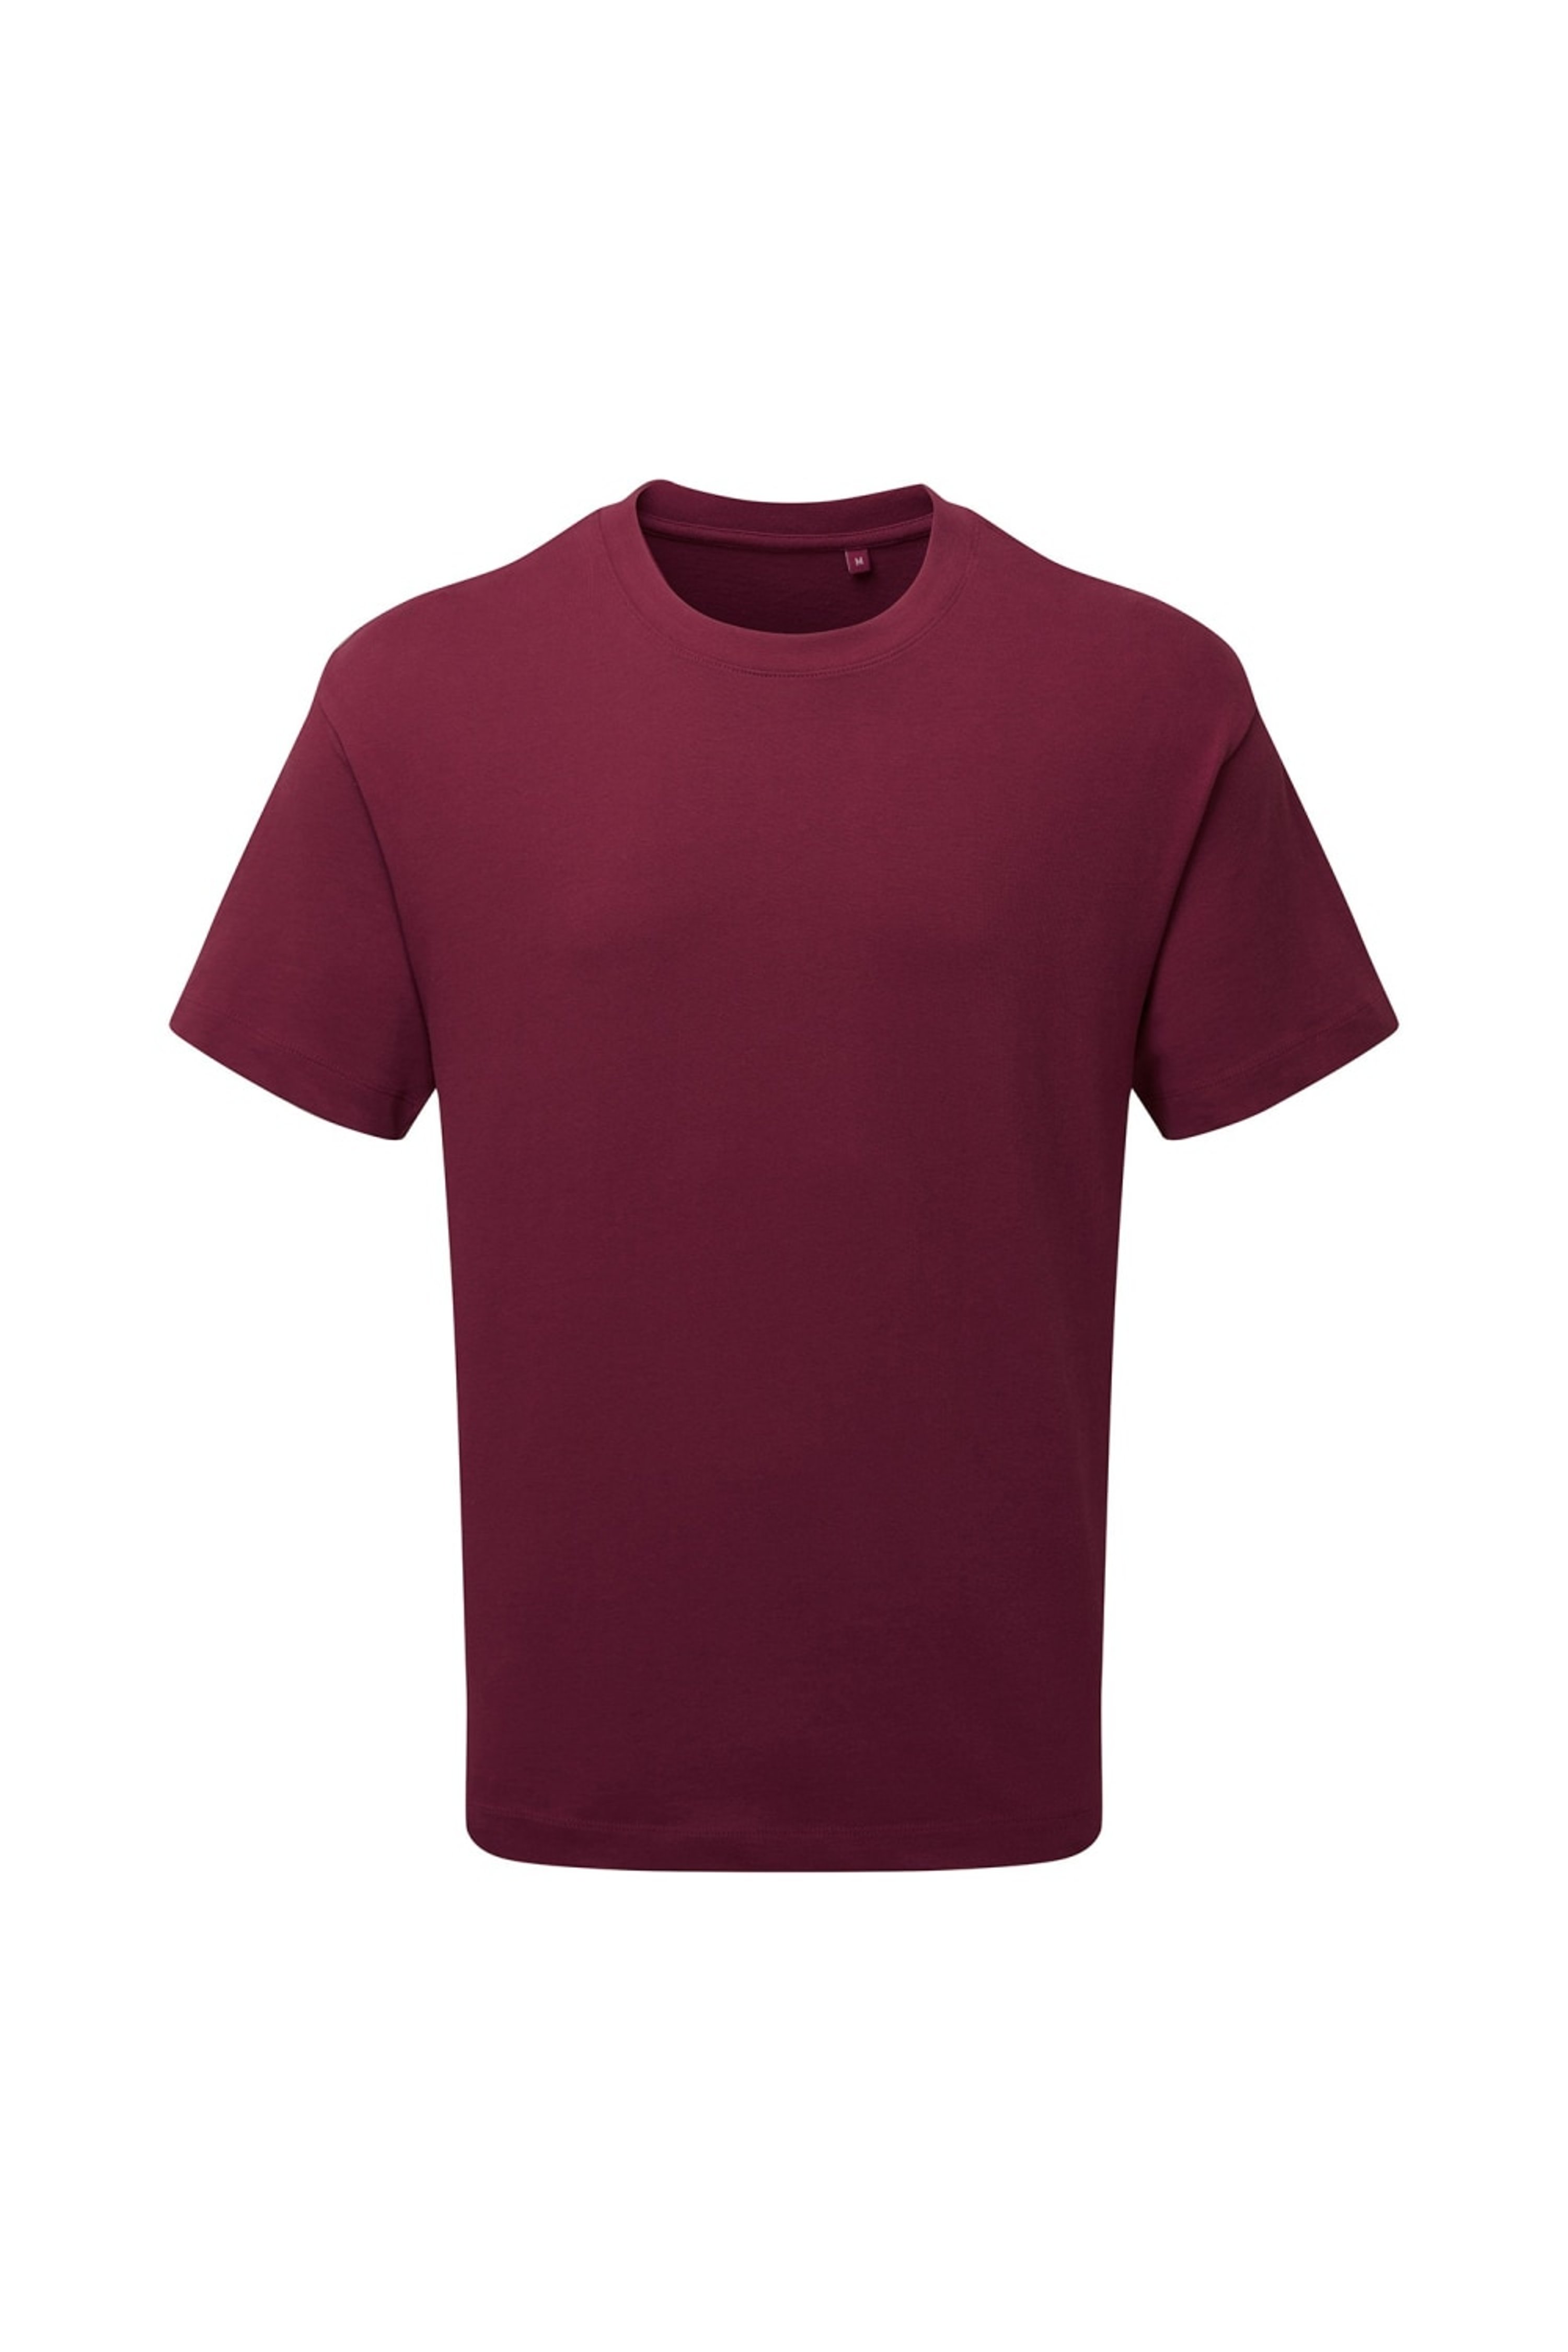 Anthem Unisex Adult Heavyweight T-shirt In Purple